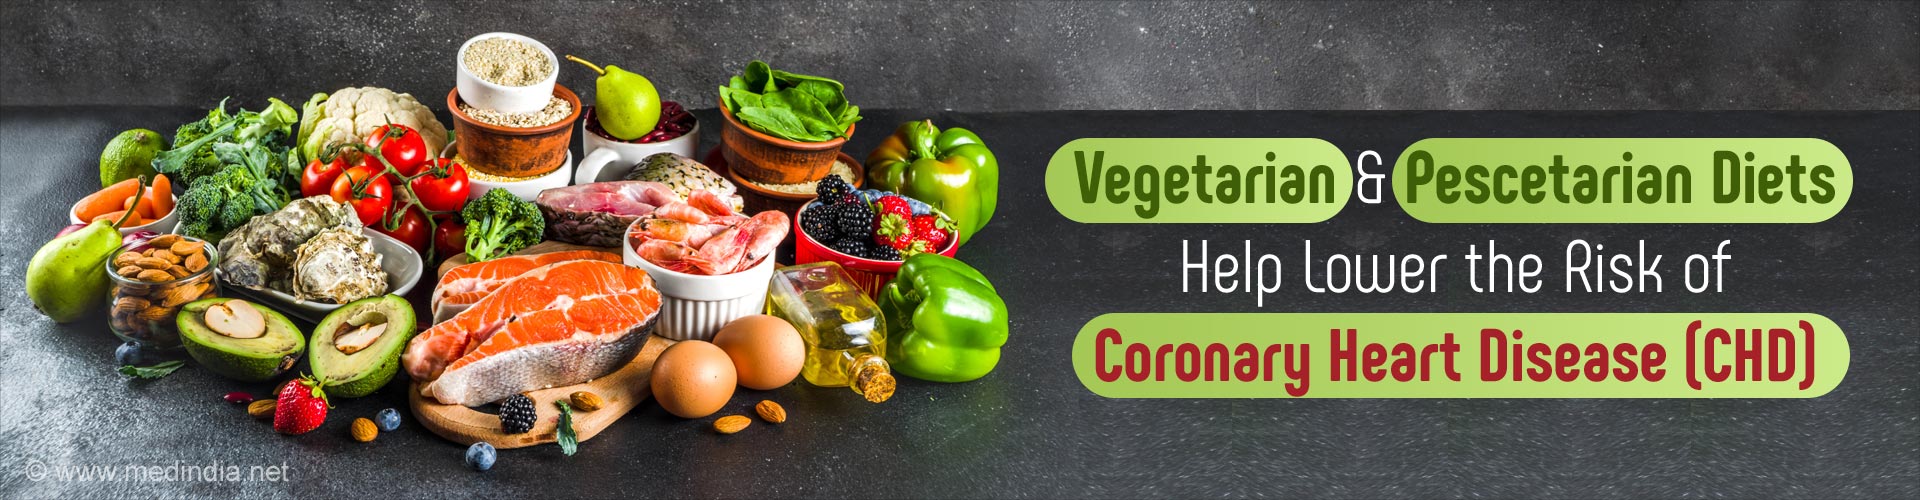 Vegetarian and Pescetarian diets help lower the risk of coronary heart disease (CHD).
